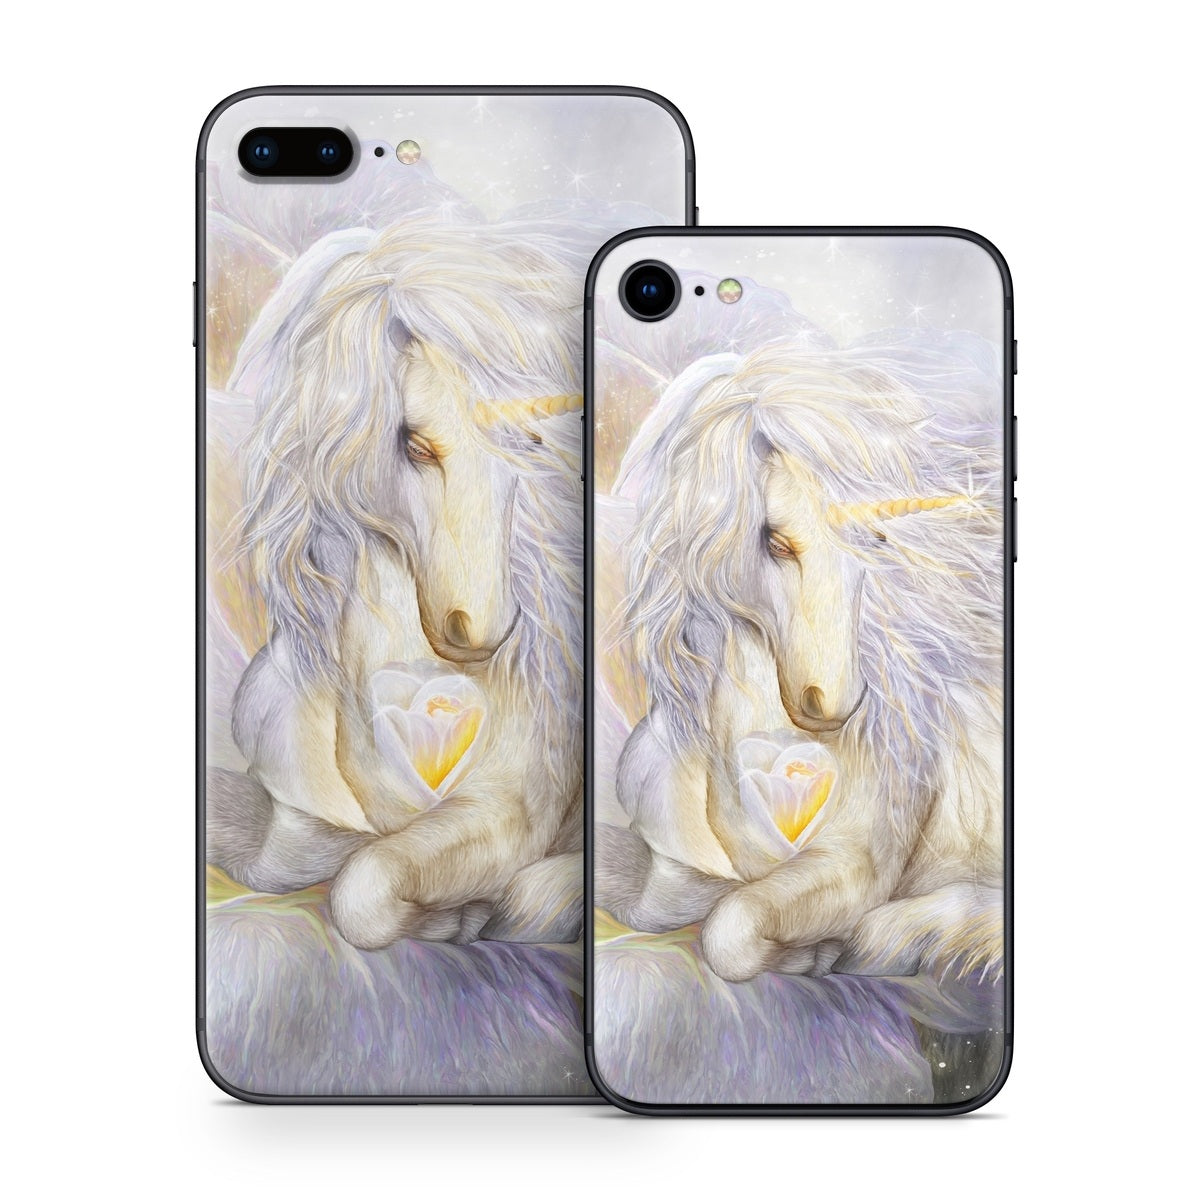 Heart Of Unicorn - Apple iPhone 8 Skin